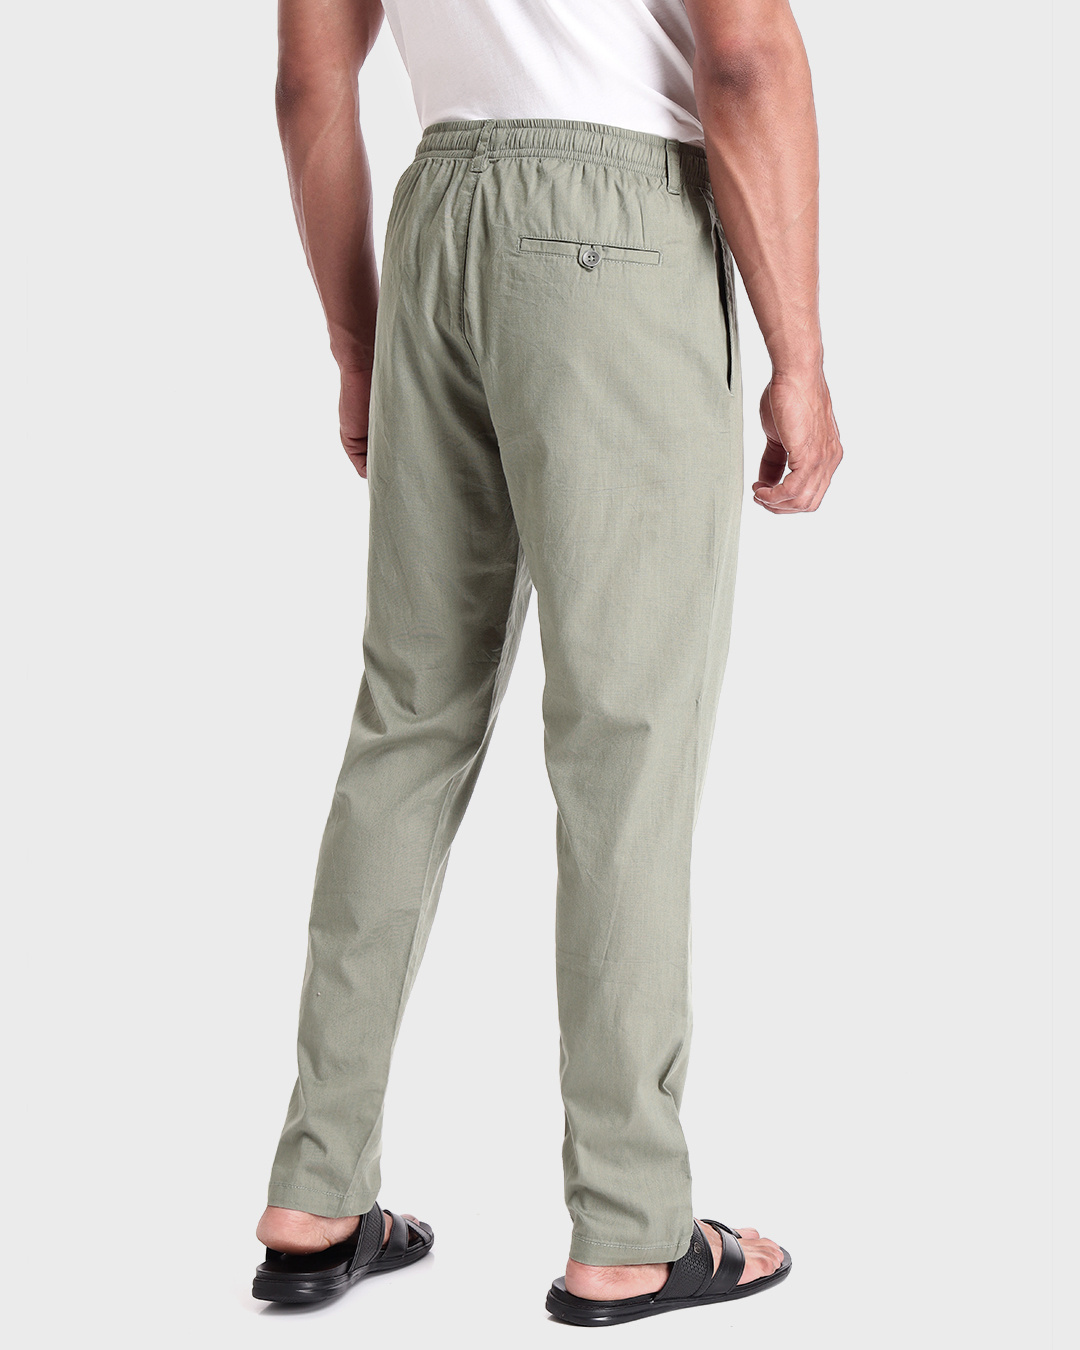 Buy Men's Sage Green Trousers Online at Bewakoof